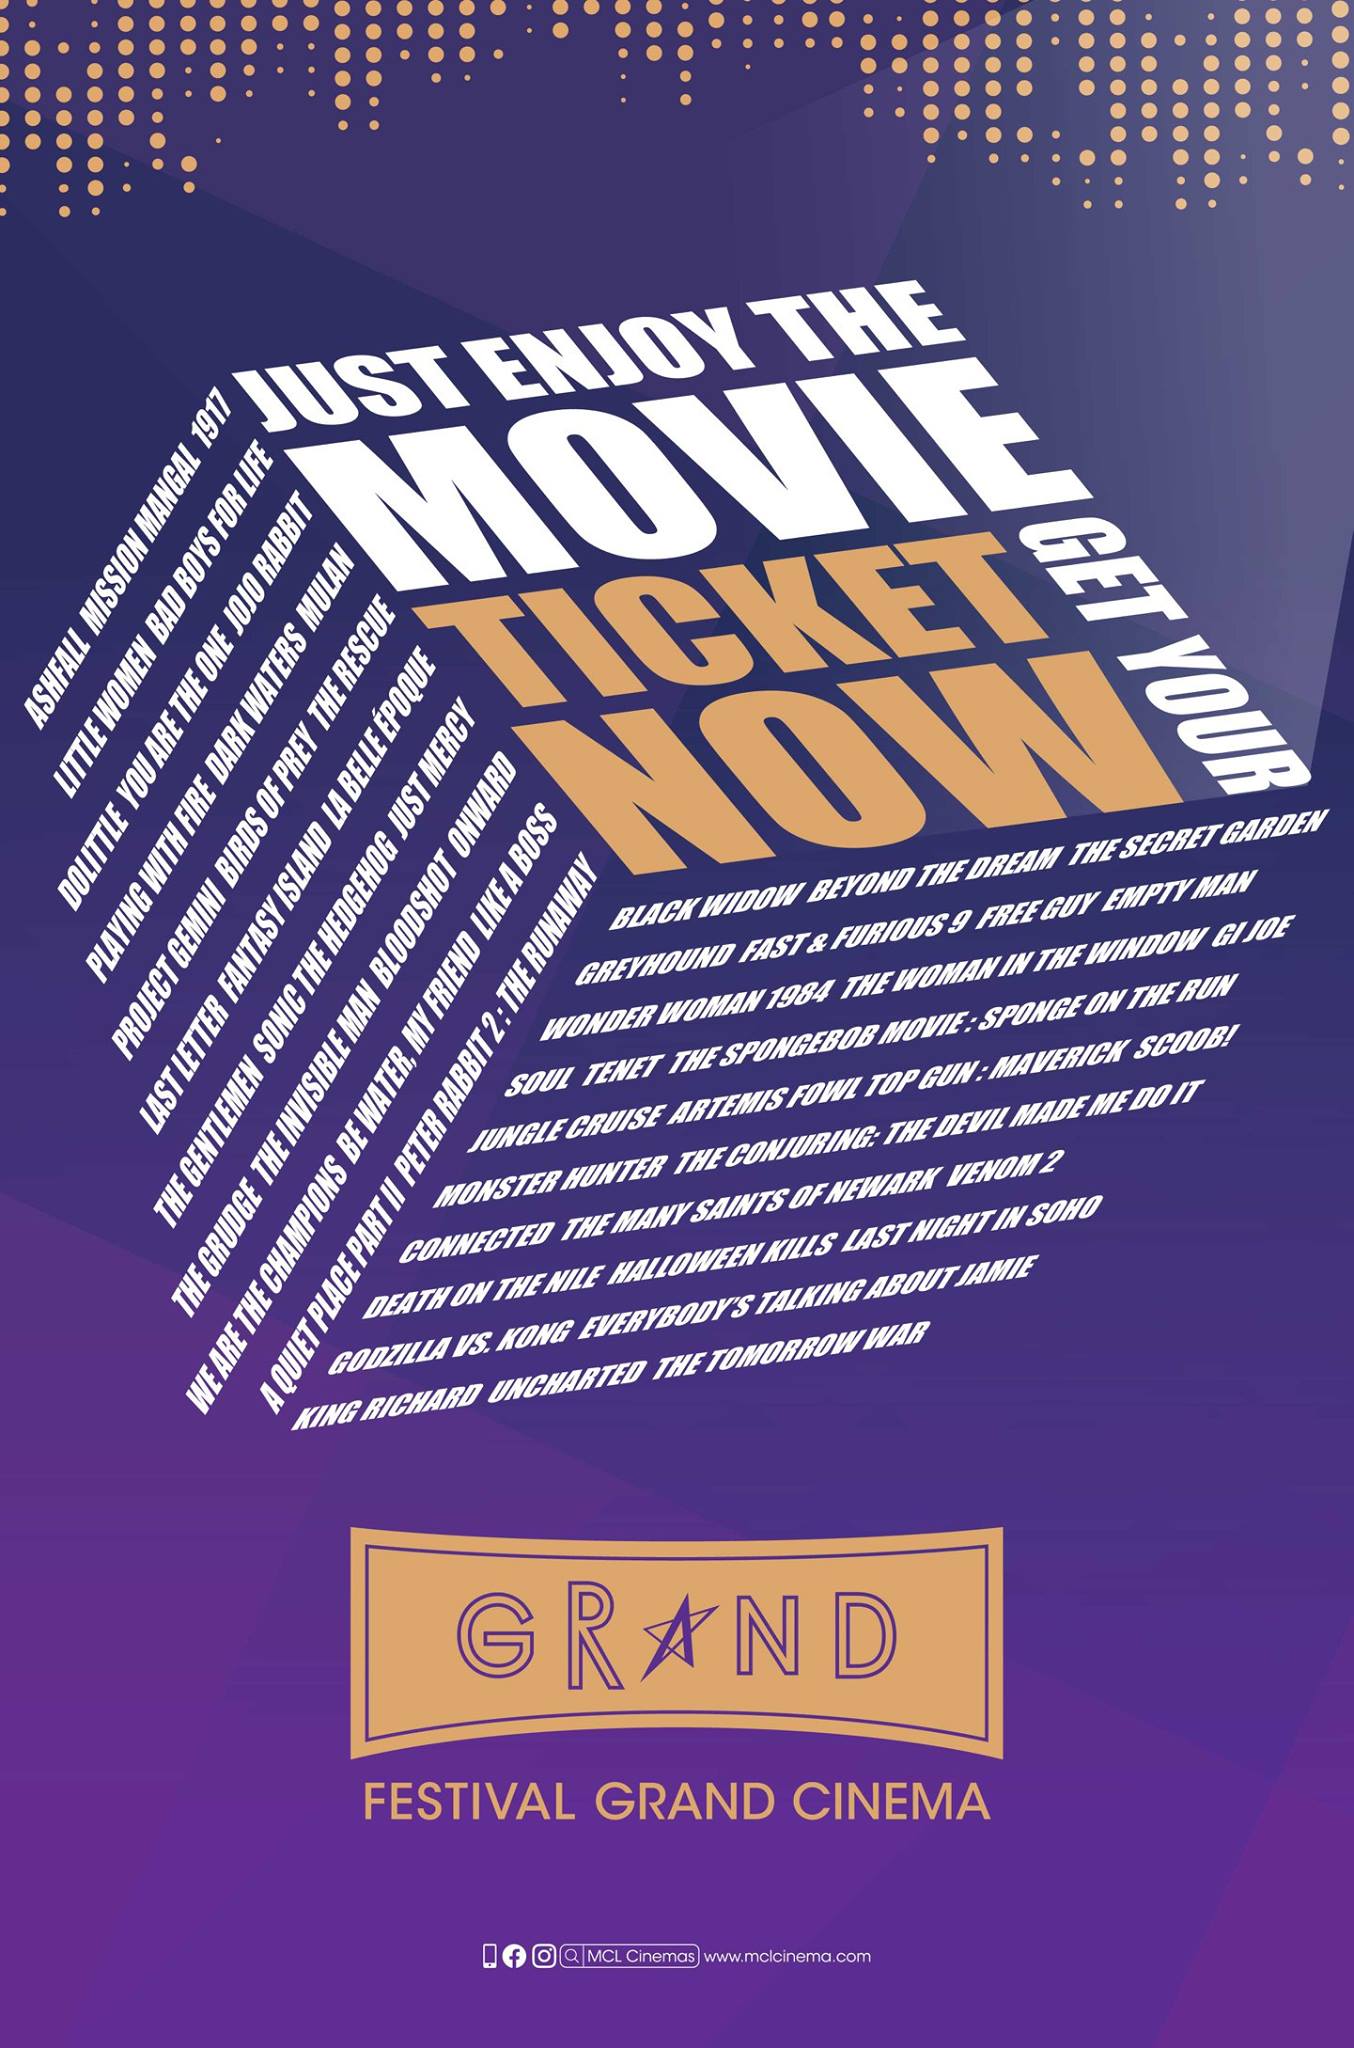 【✨ Festival Grand Cinema聽日番黎啦✨】 Festival Grand Cinema聽日番黎啦！🥳多套精彩電影上映，唔好錯過呀~ #2020年1月16日...